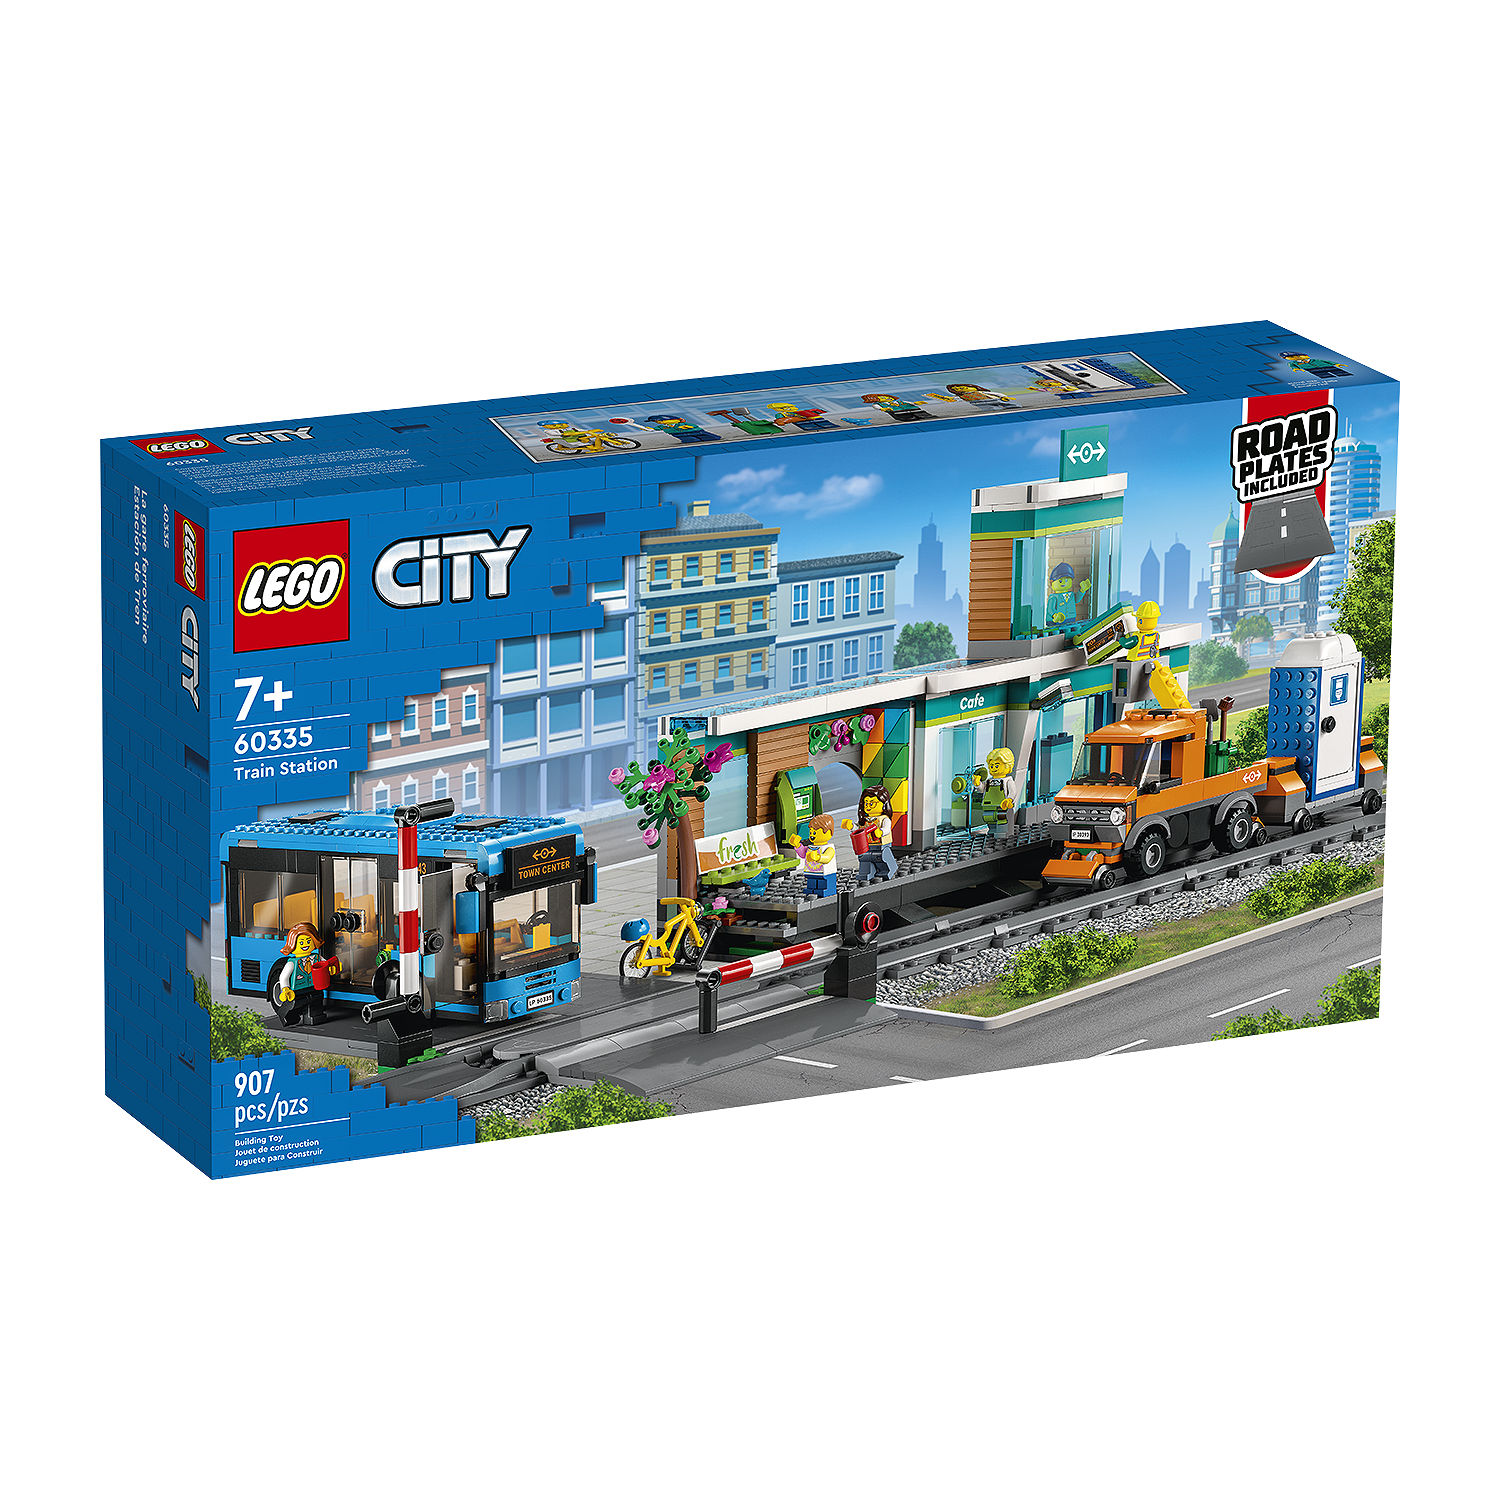 Pounding pave Svaghed LEGO City Trains Train Station 60335 Building Set (907 Pieces)